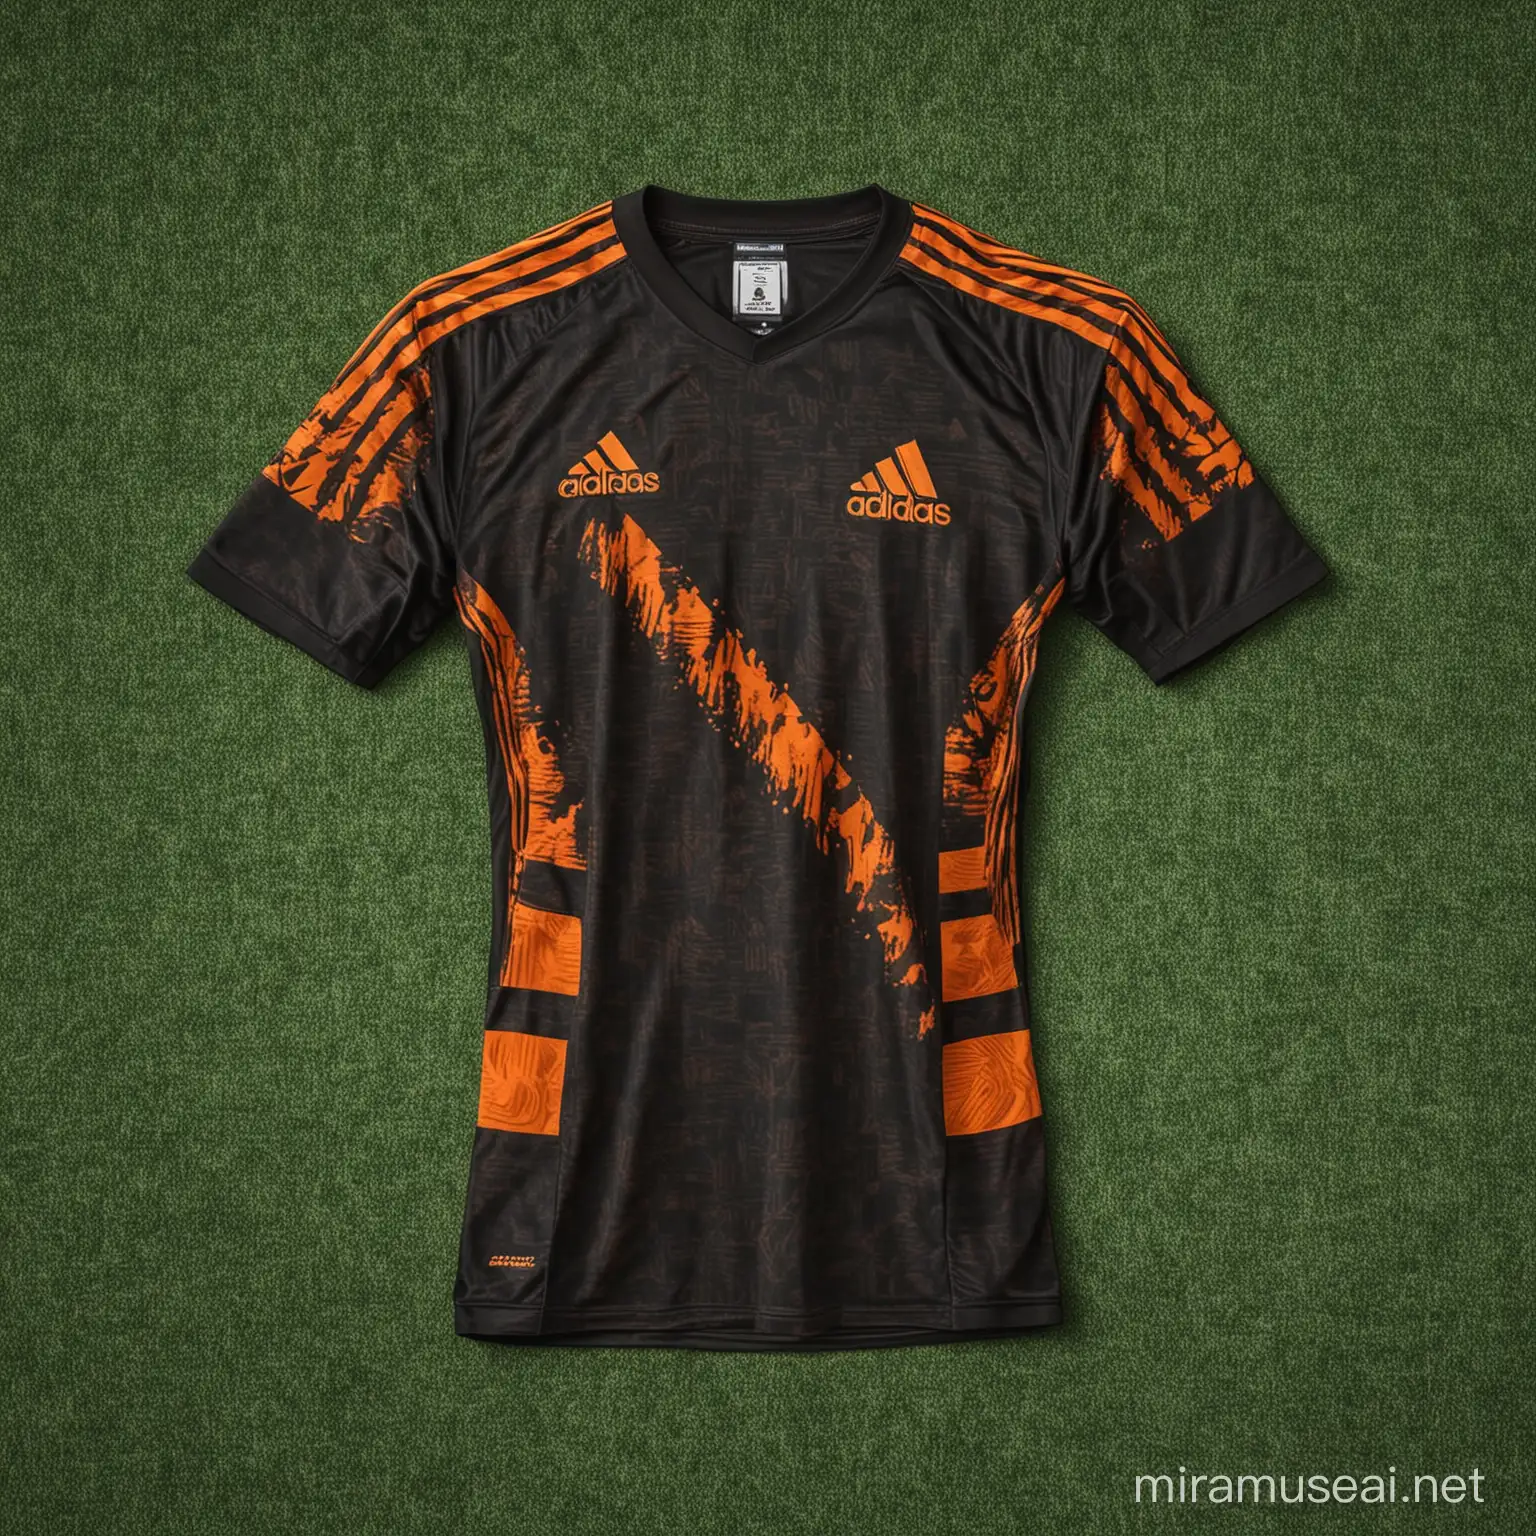 Custom Football Jersey Vibrant Orange and Black with Adidas Jacquard Designs